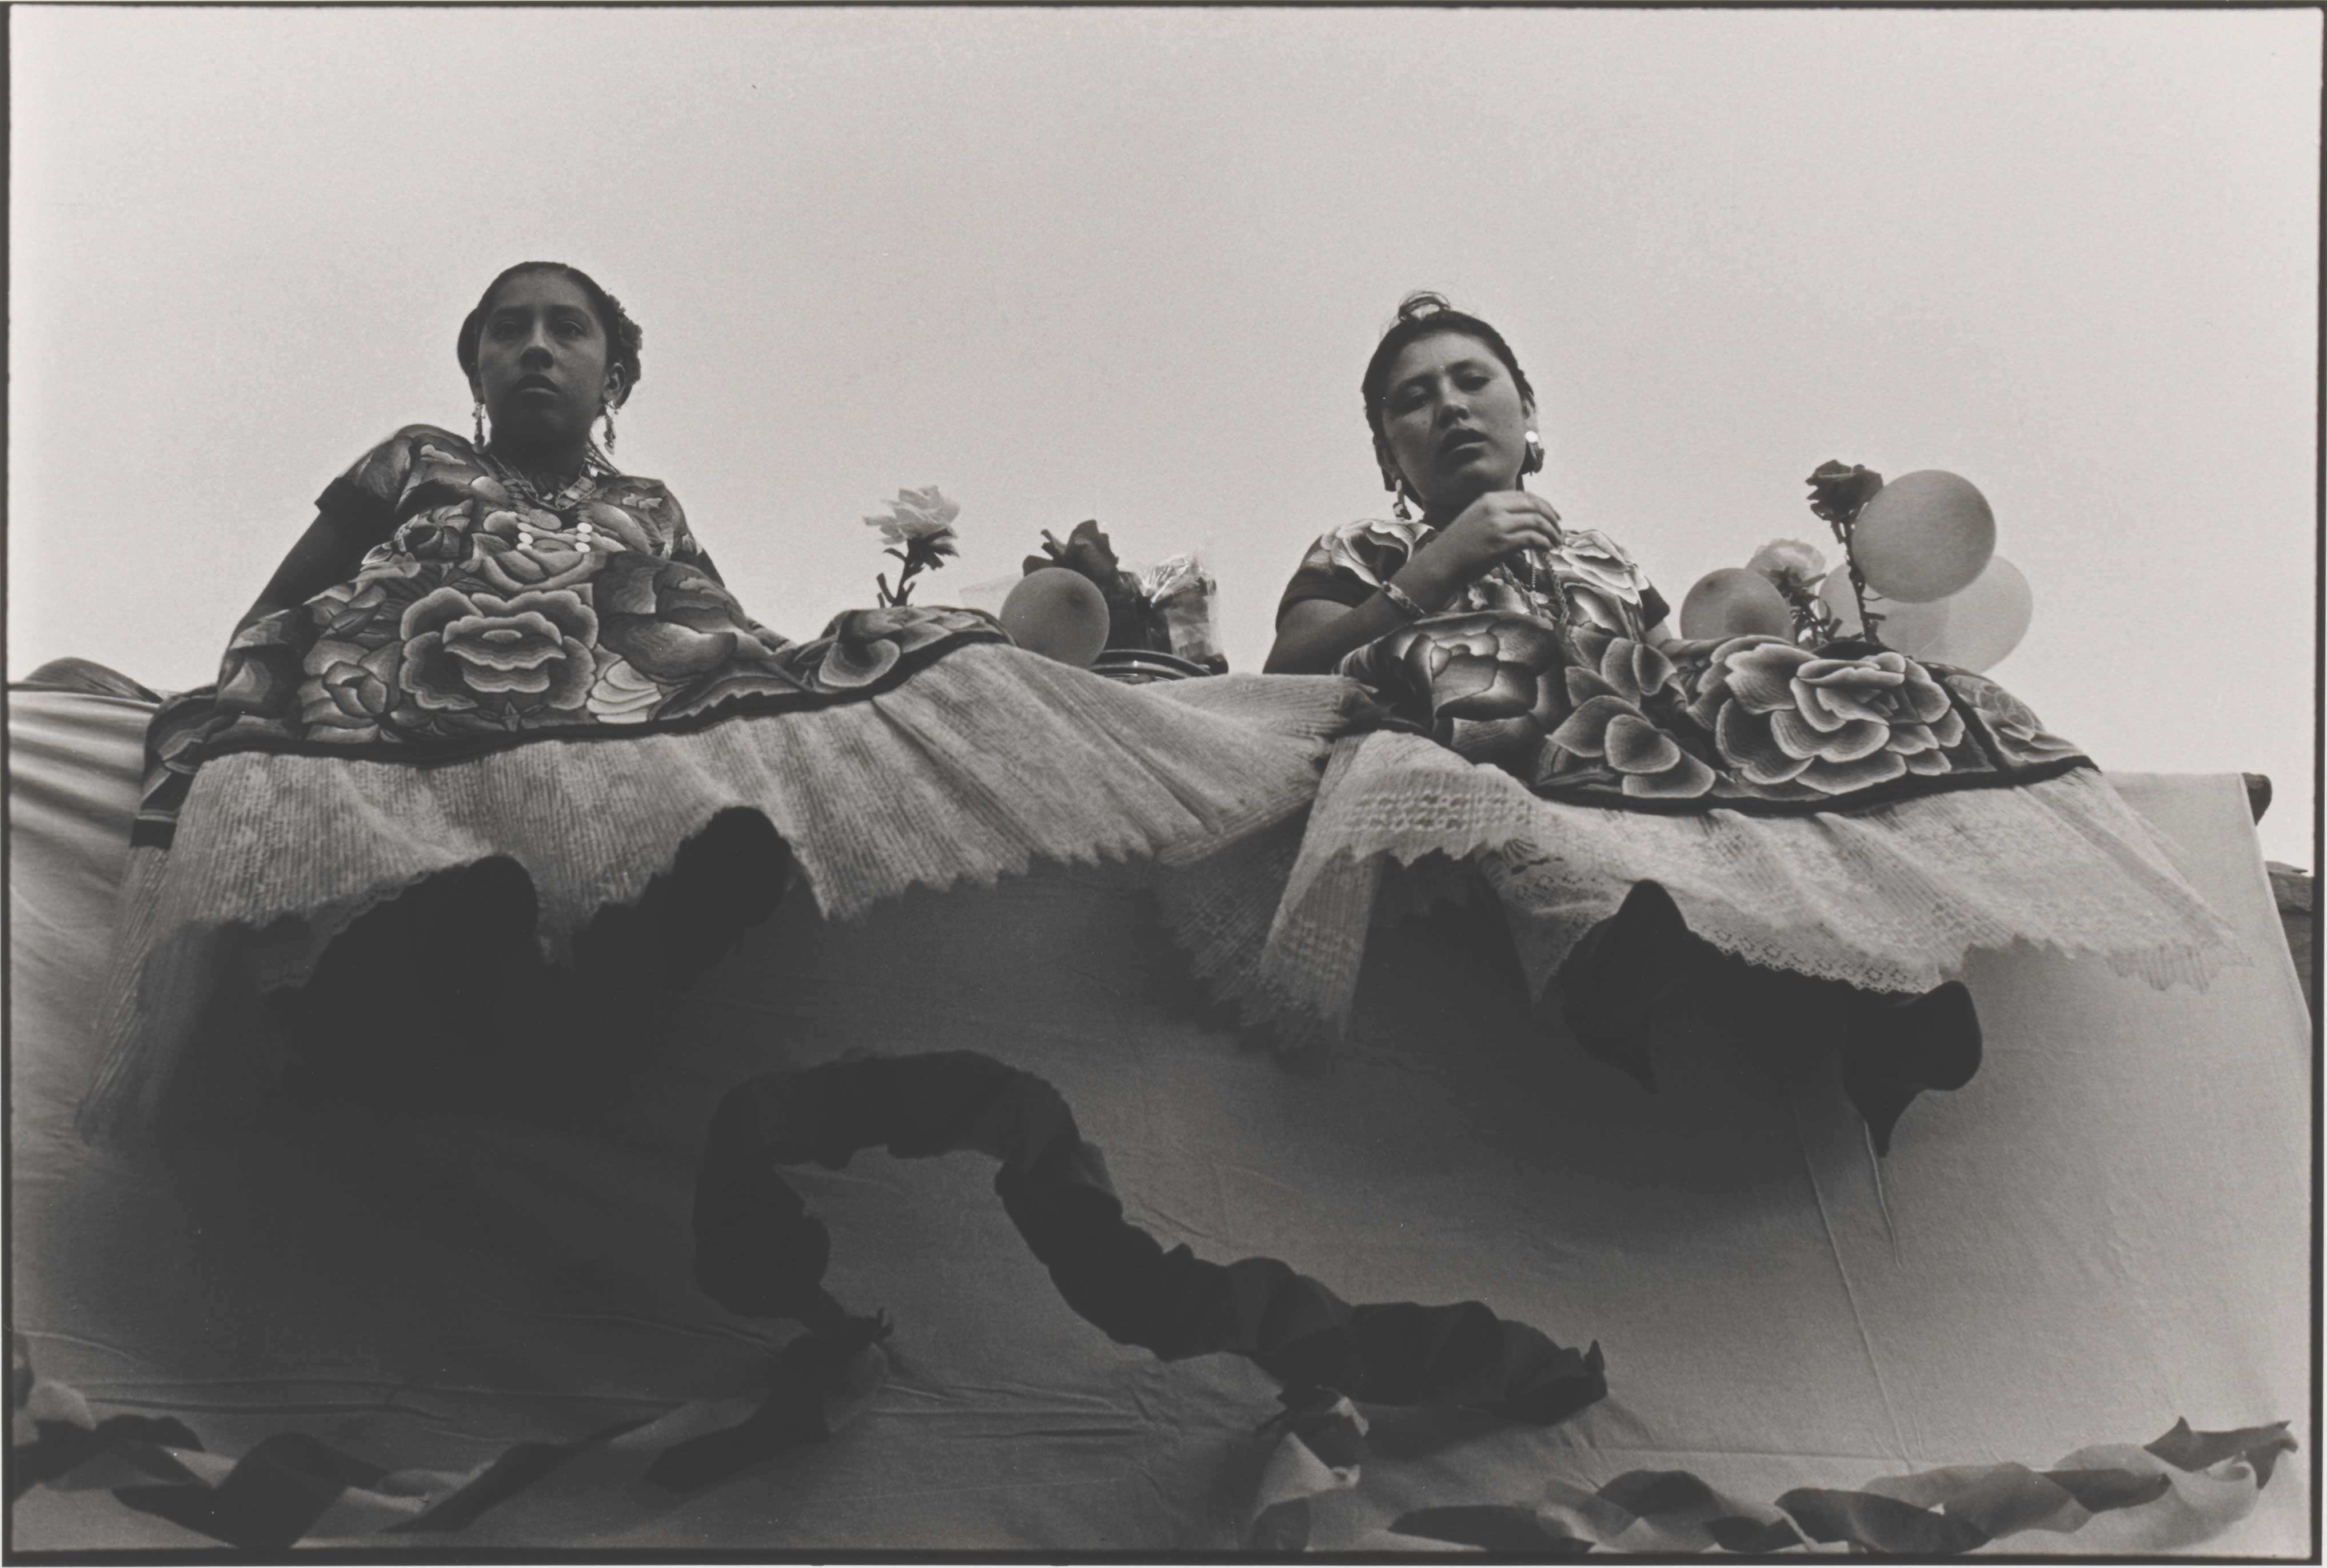 Graciela Iturbide (Mexican, born 1942), Fiesta de las velas (Festival of the Candles), Juchitán, Oaxaca, Mexico (detail), 1992, 1986 negative; printed about 1992, gelatin silver print. Bank of America Collection. Courtesy of the artist